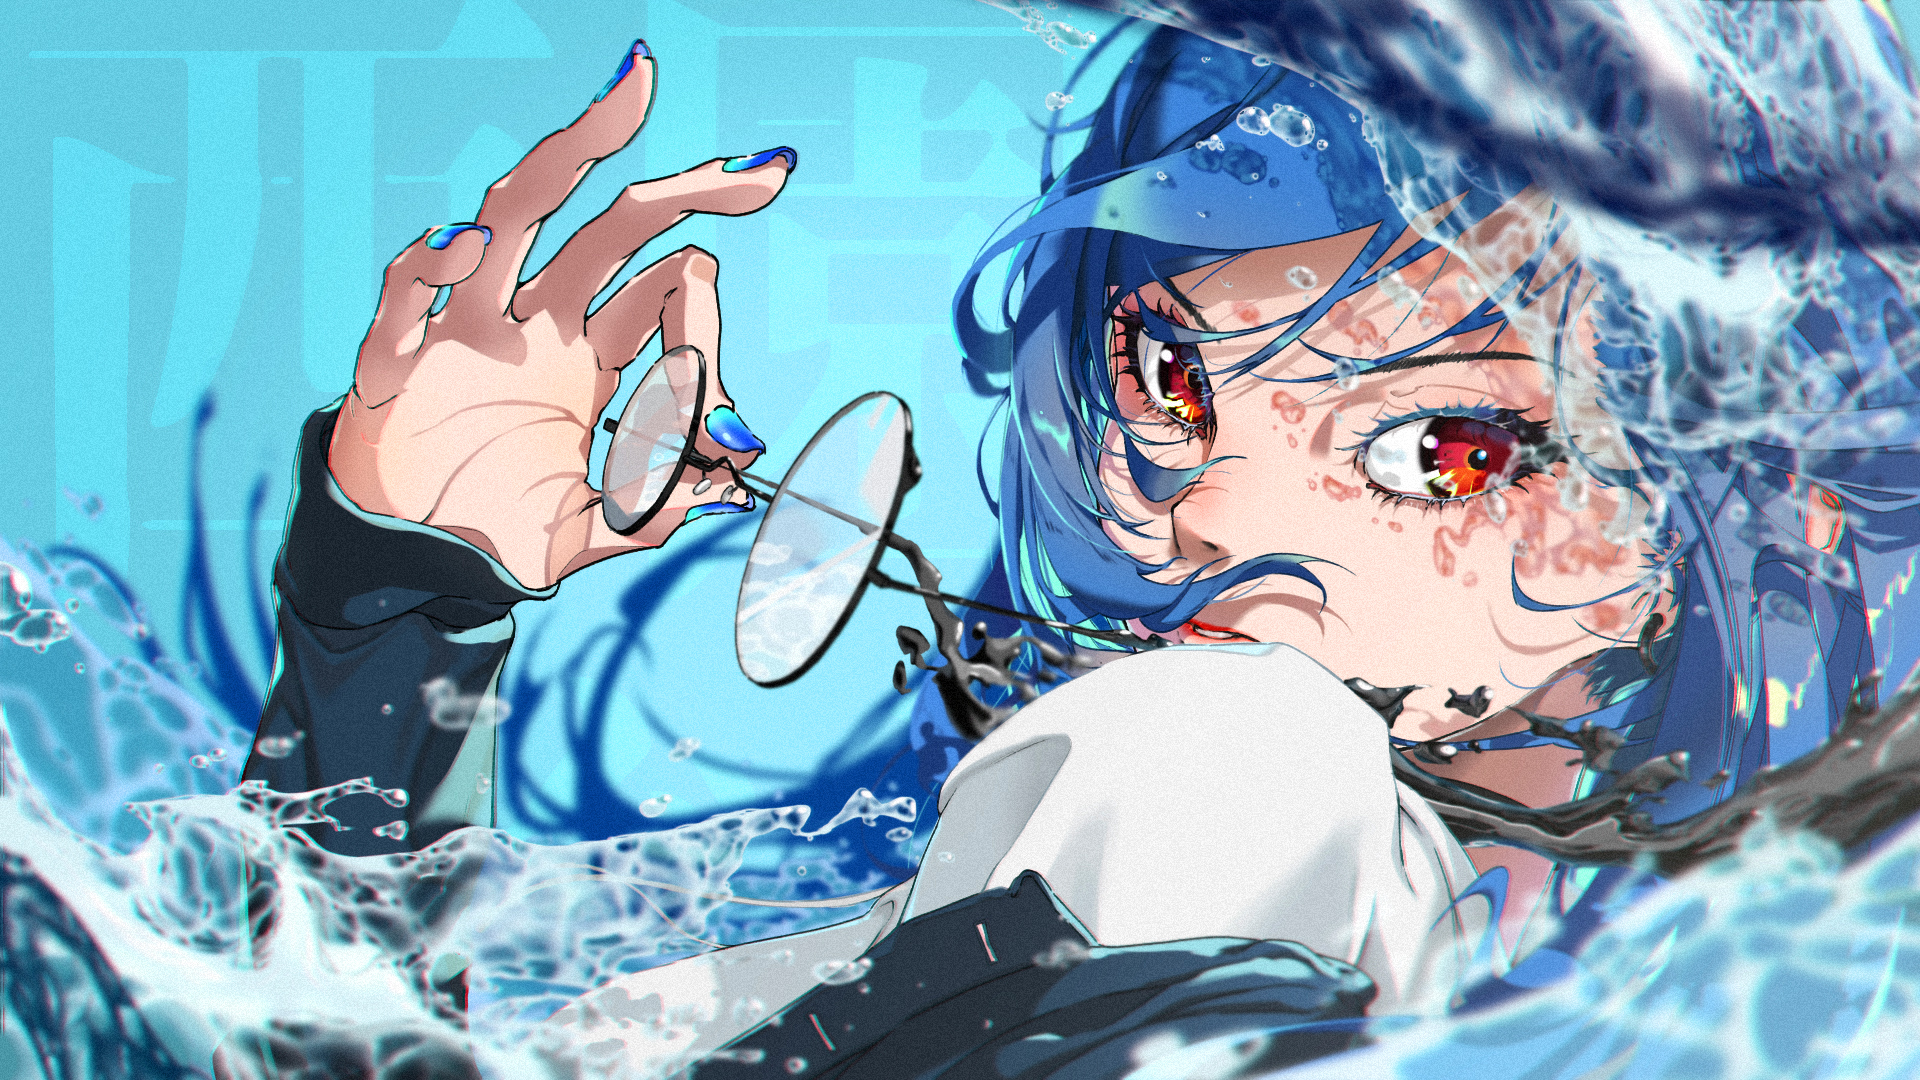 Anime Anime Girls Nijisanji Virtual Youtuber Red Eyes Glasses Blue Nails Blue Hair Water Splash Look 1920x1080